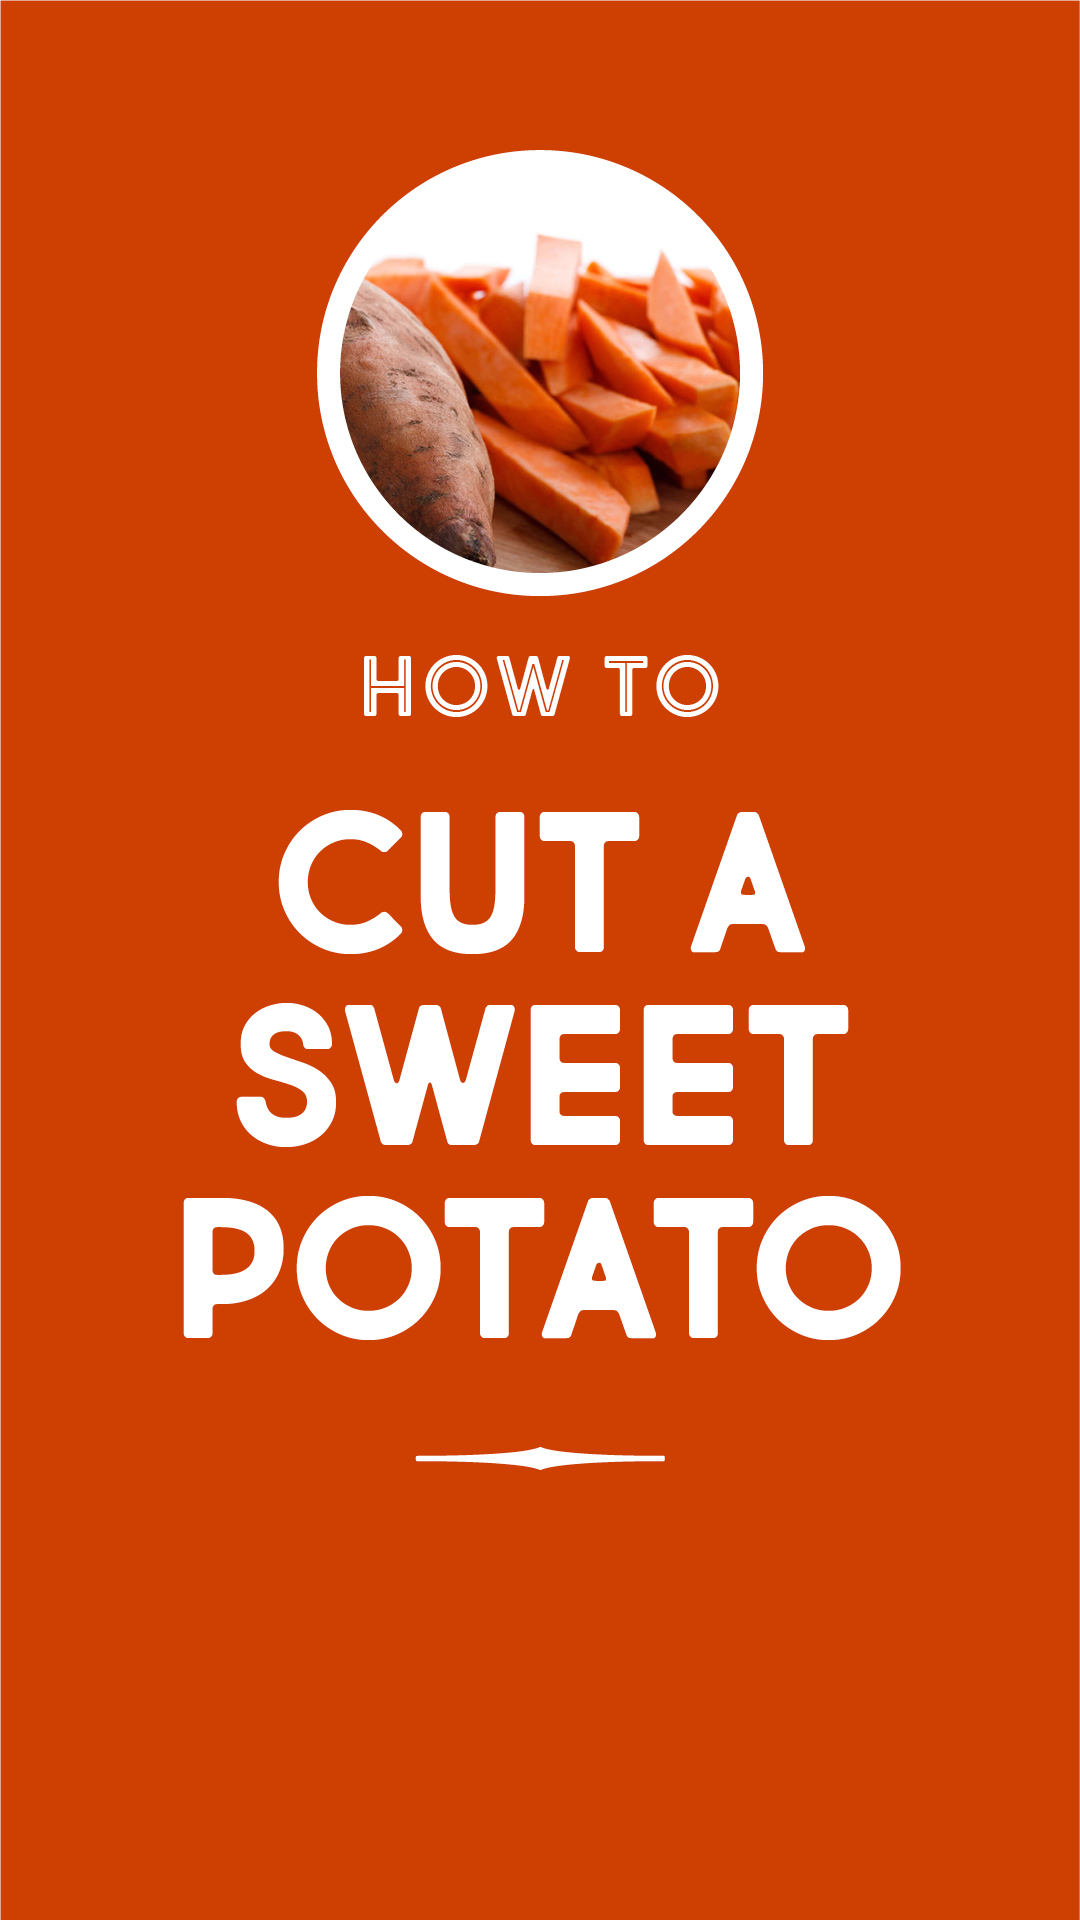 Meal prep hacks: How to cut a sweet potato